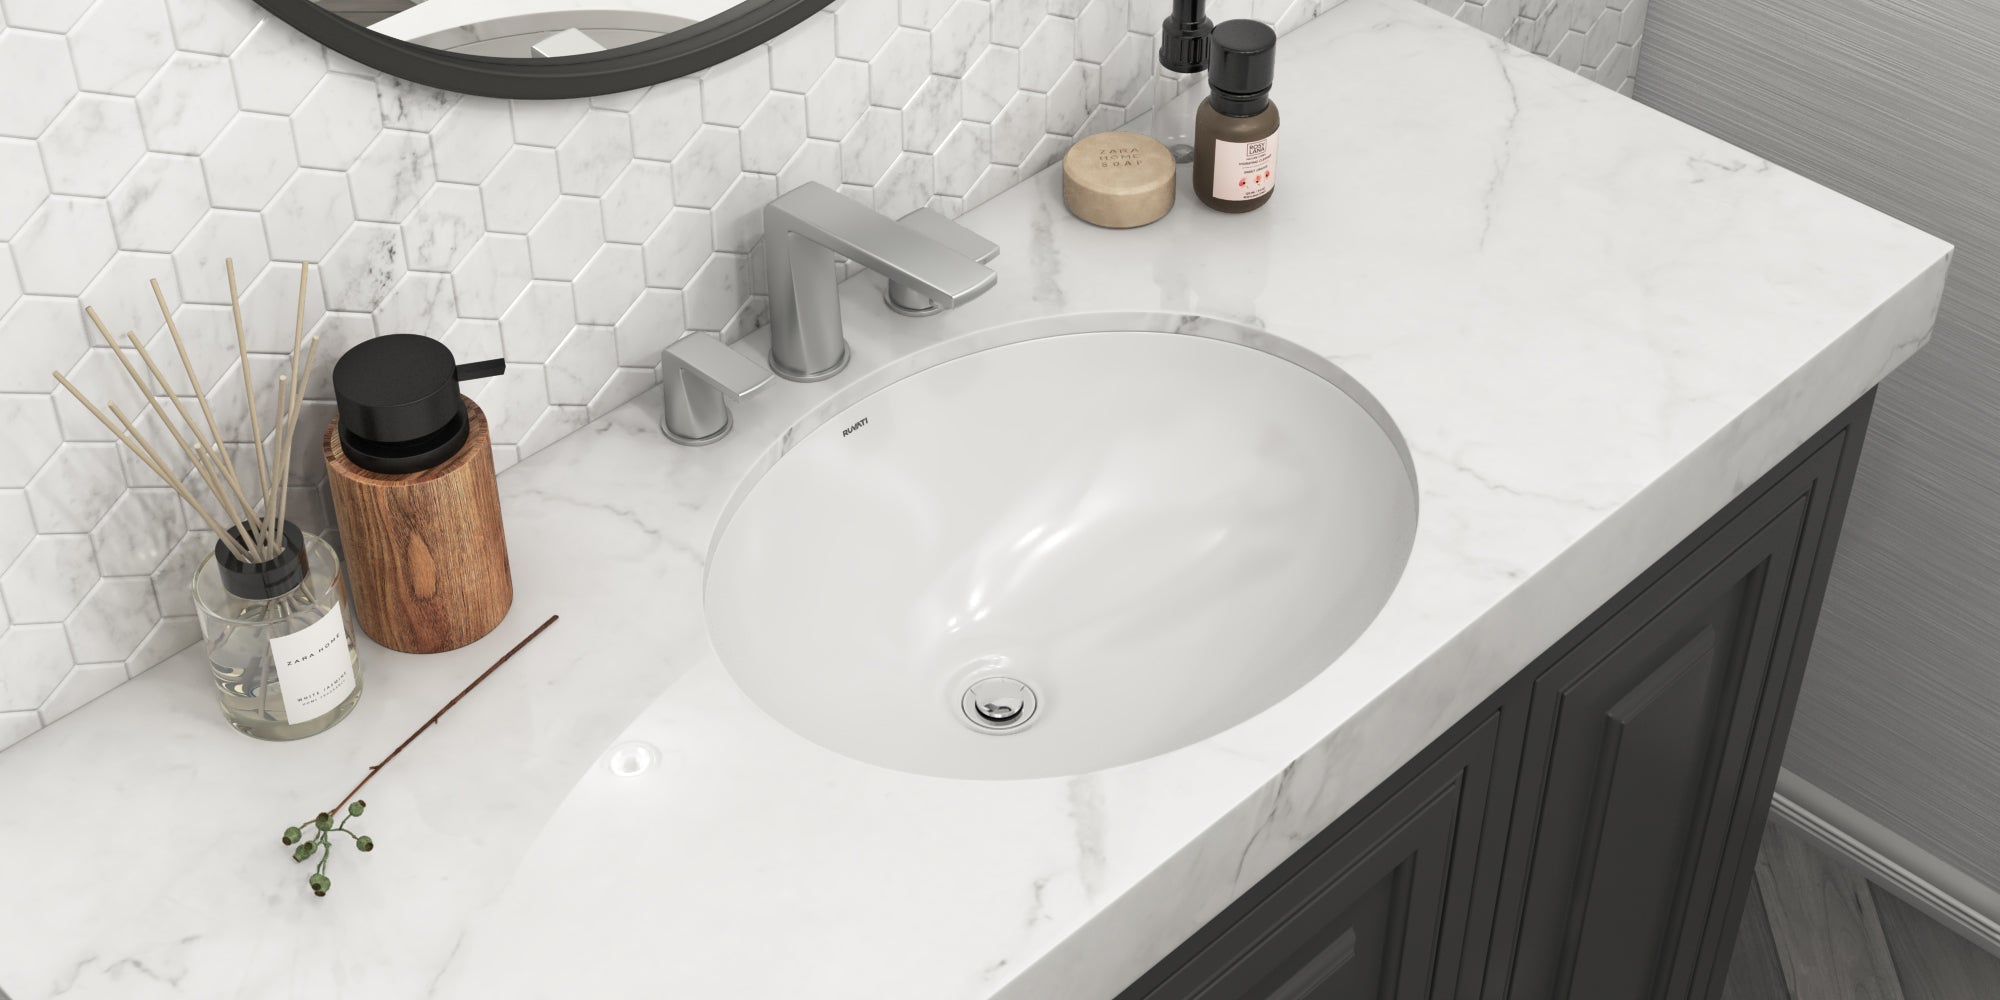 Ruvati 17" x 14" Oval Undermount Bathroom Sink in White